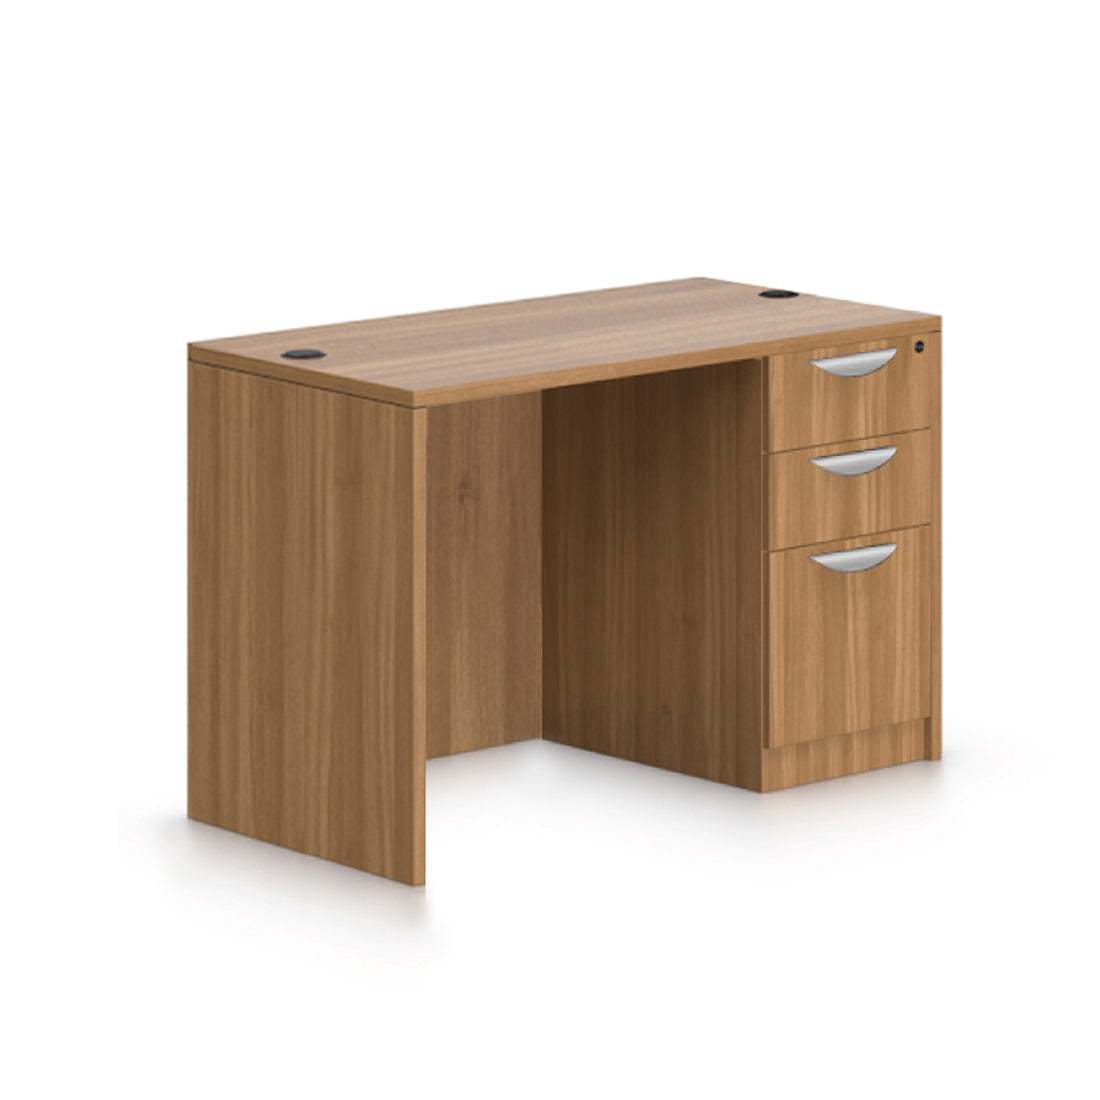 48"x24" Rectangular Desk with B/B/F pedestal - Kainosbuy.com